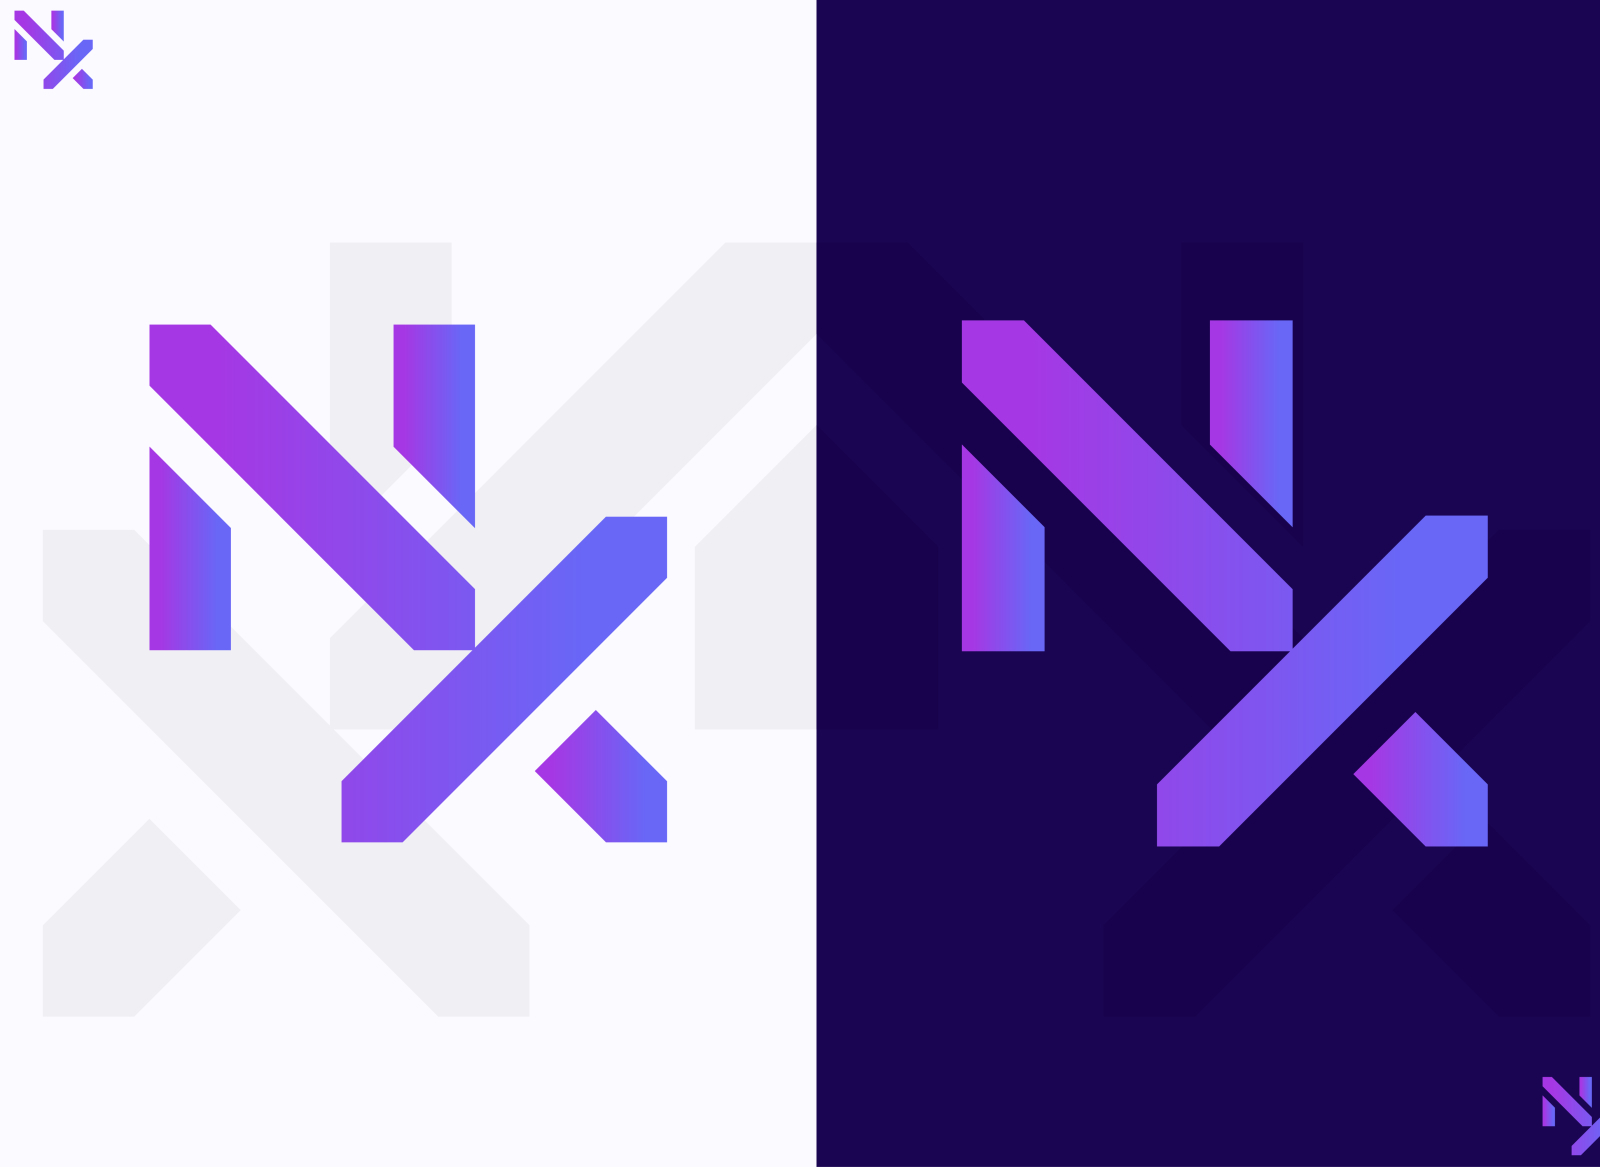 nx logo in neon